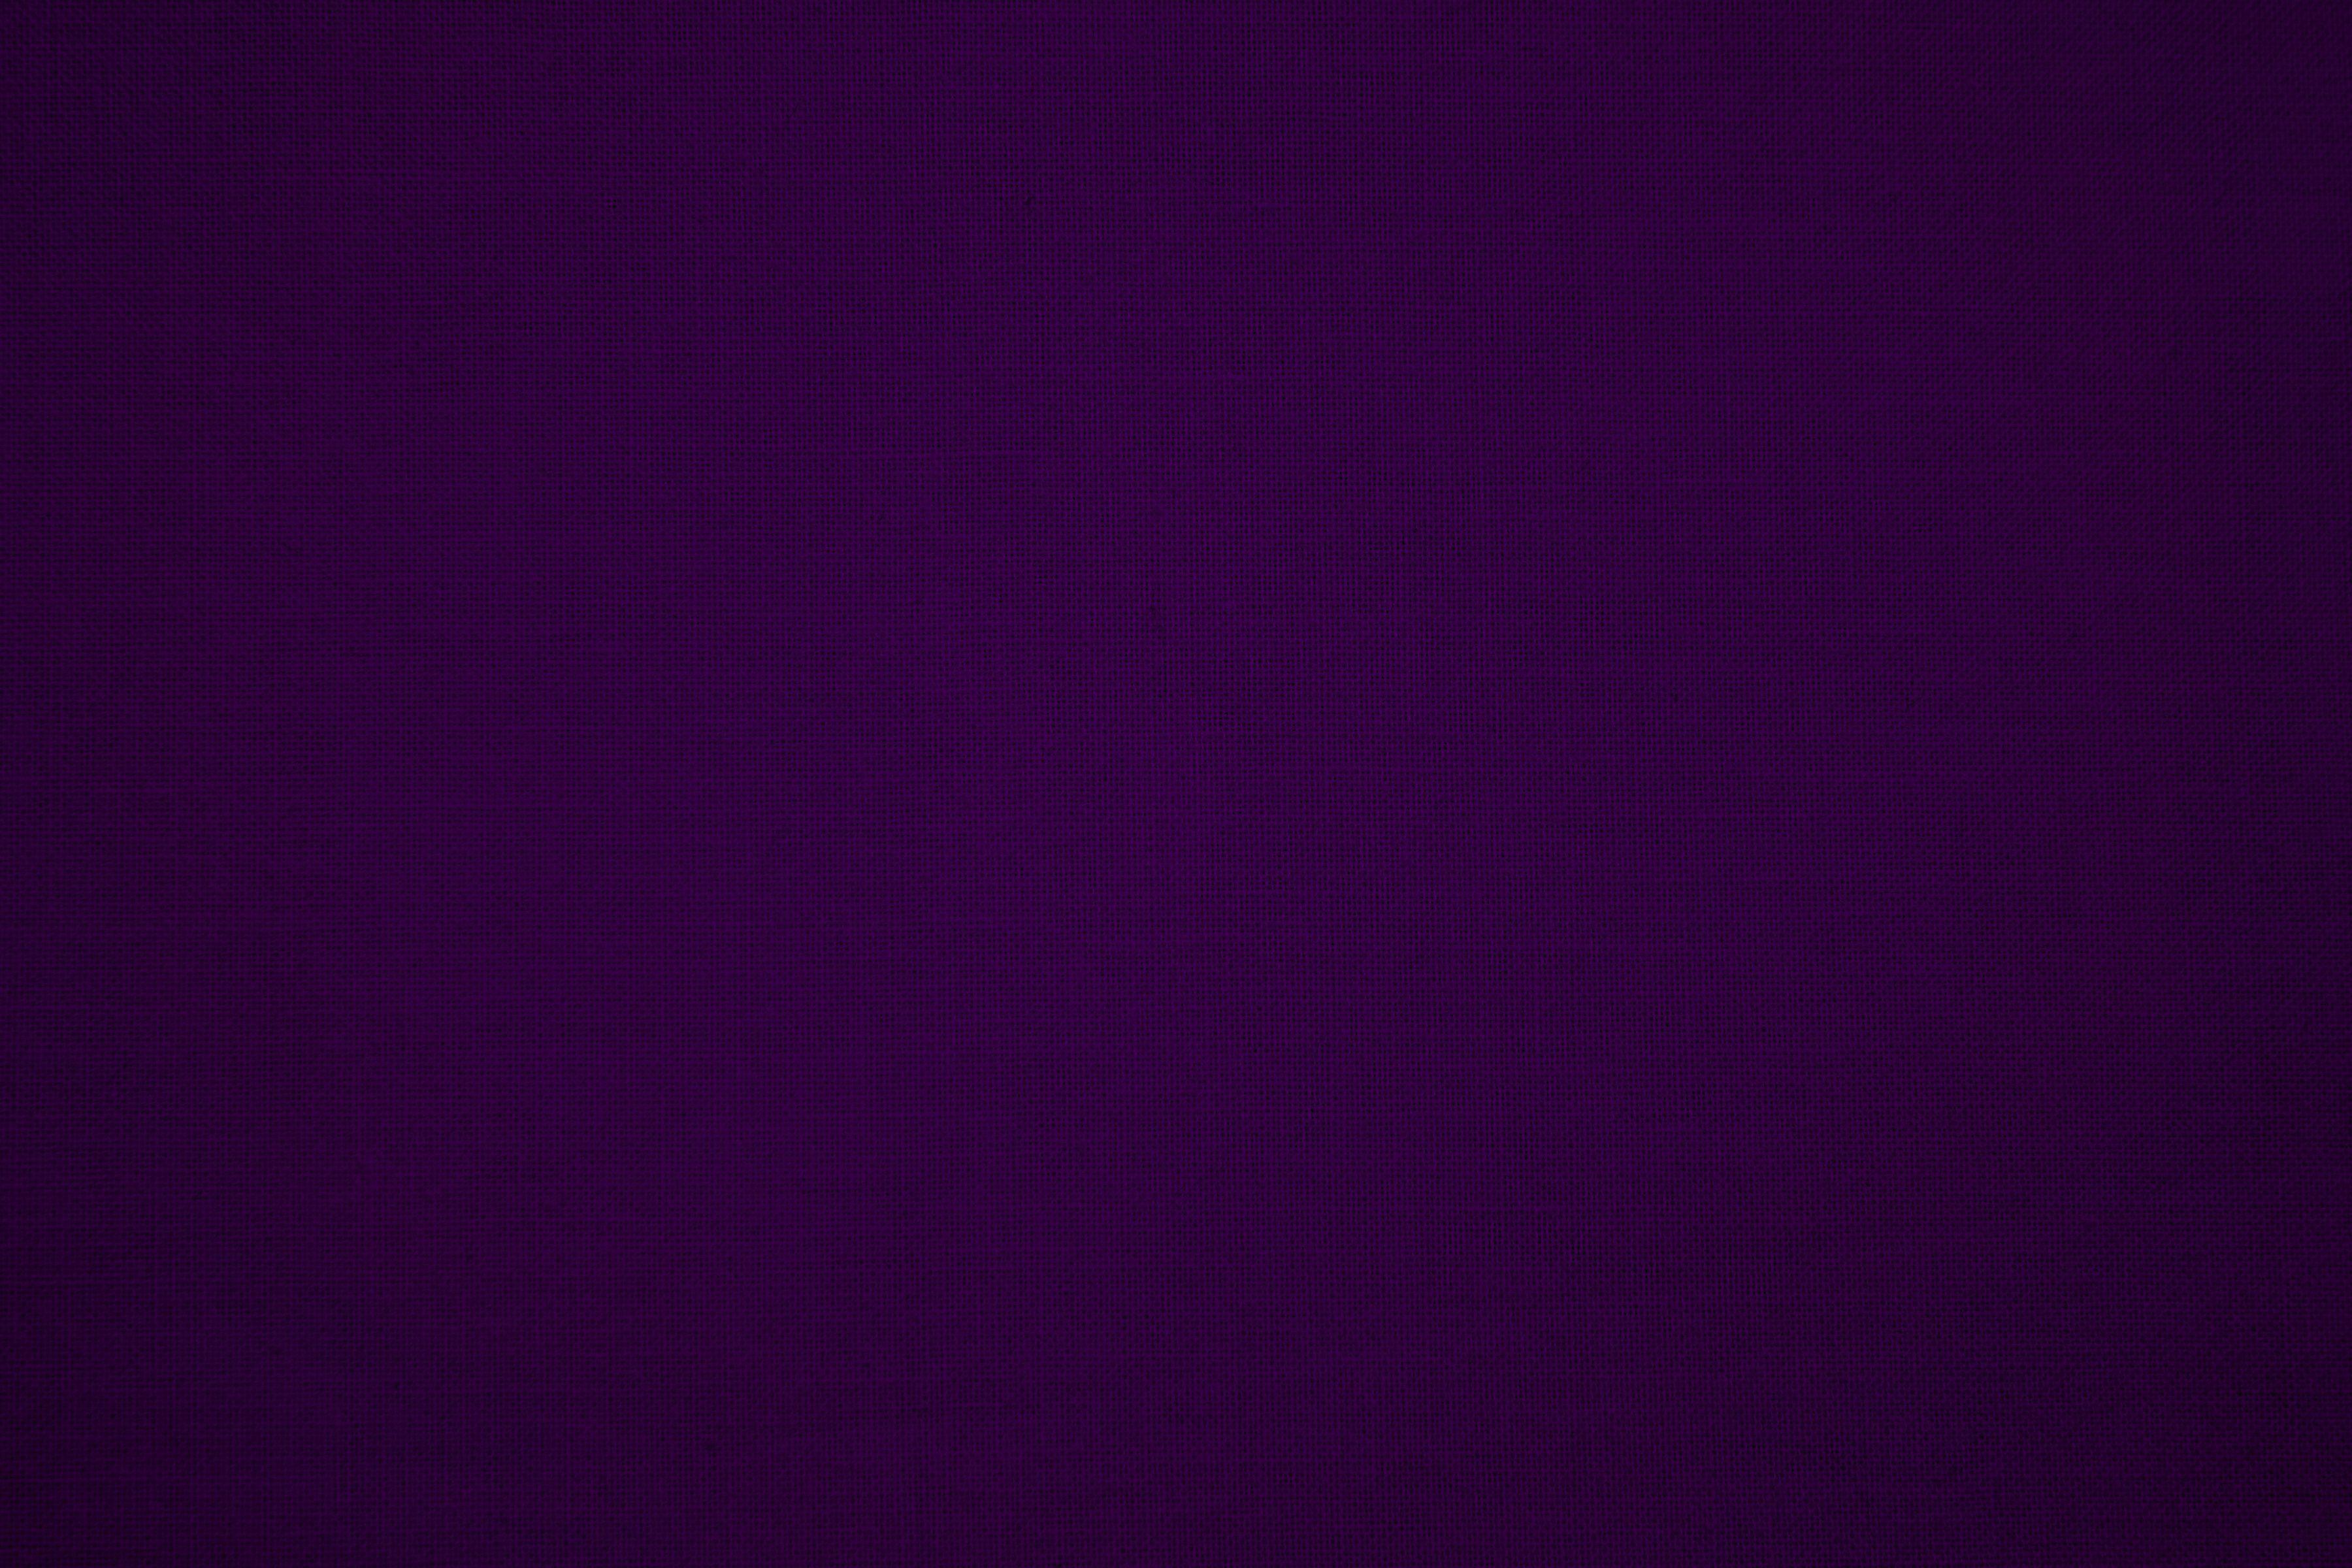 free-download-dark-purple-backgrounds-3600x2400-for-your-desktop